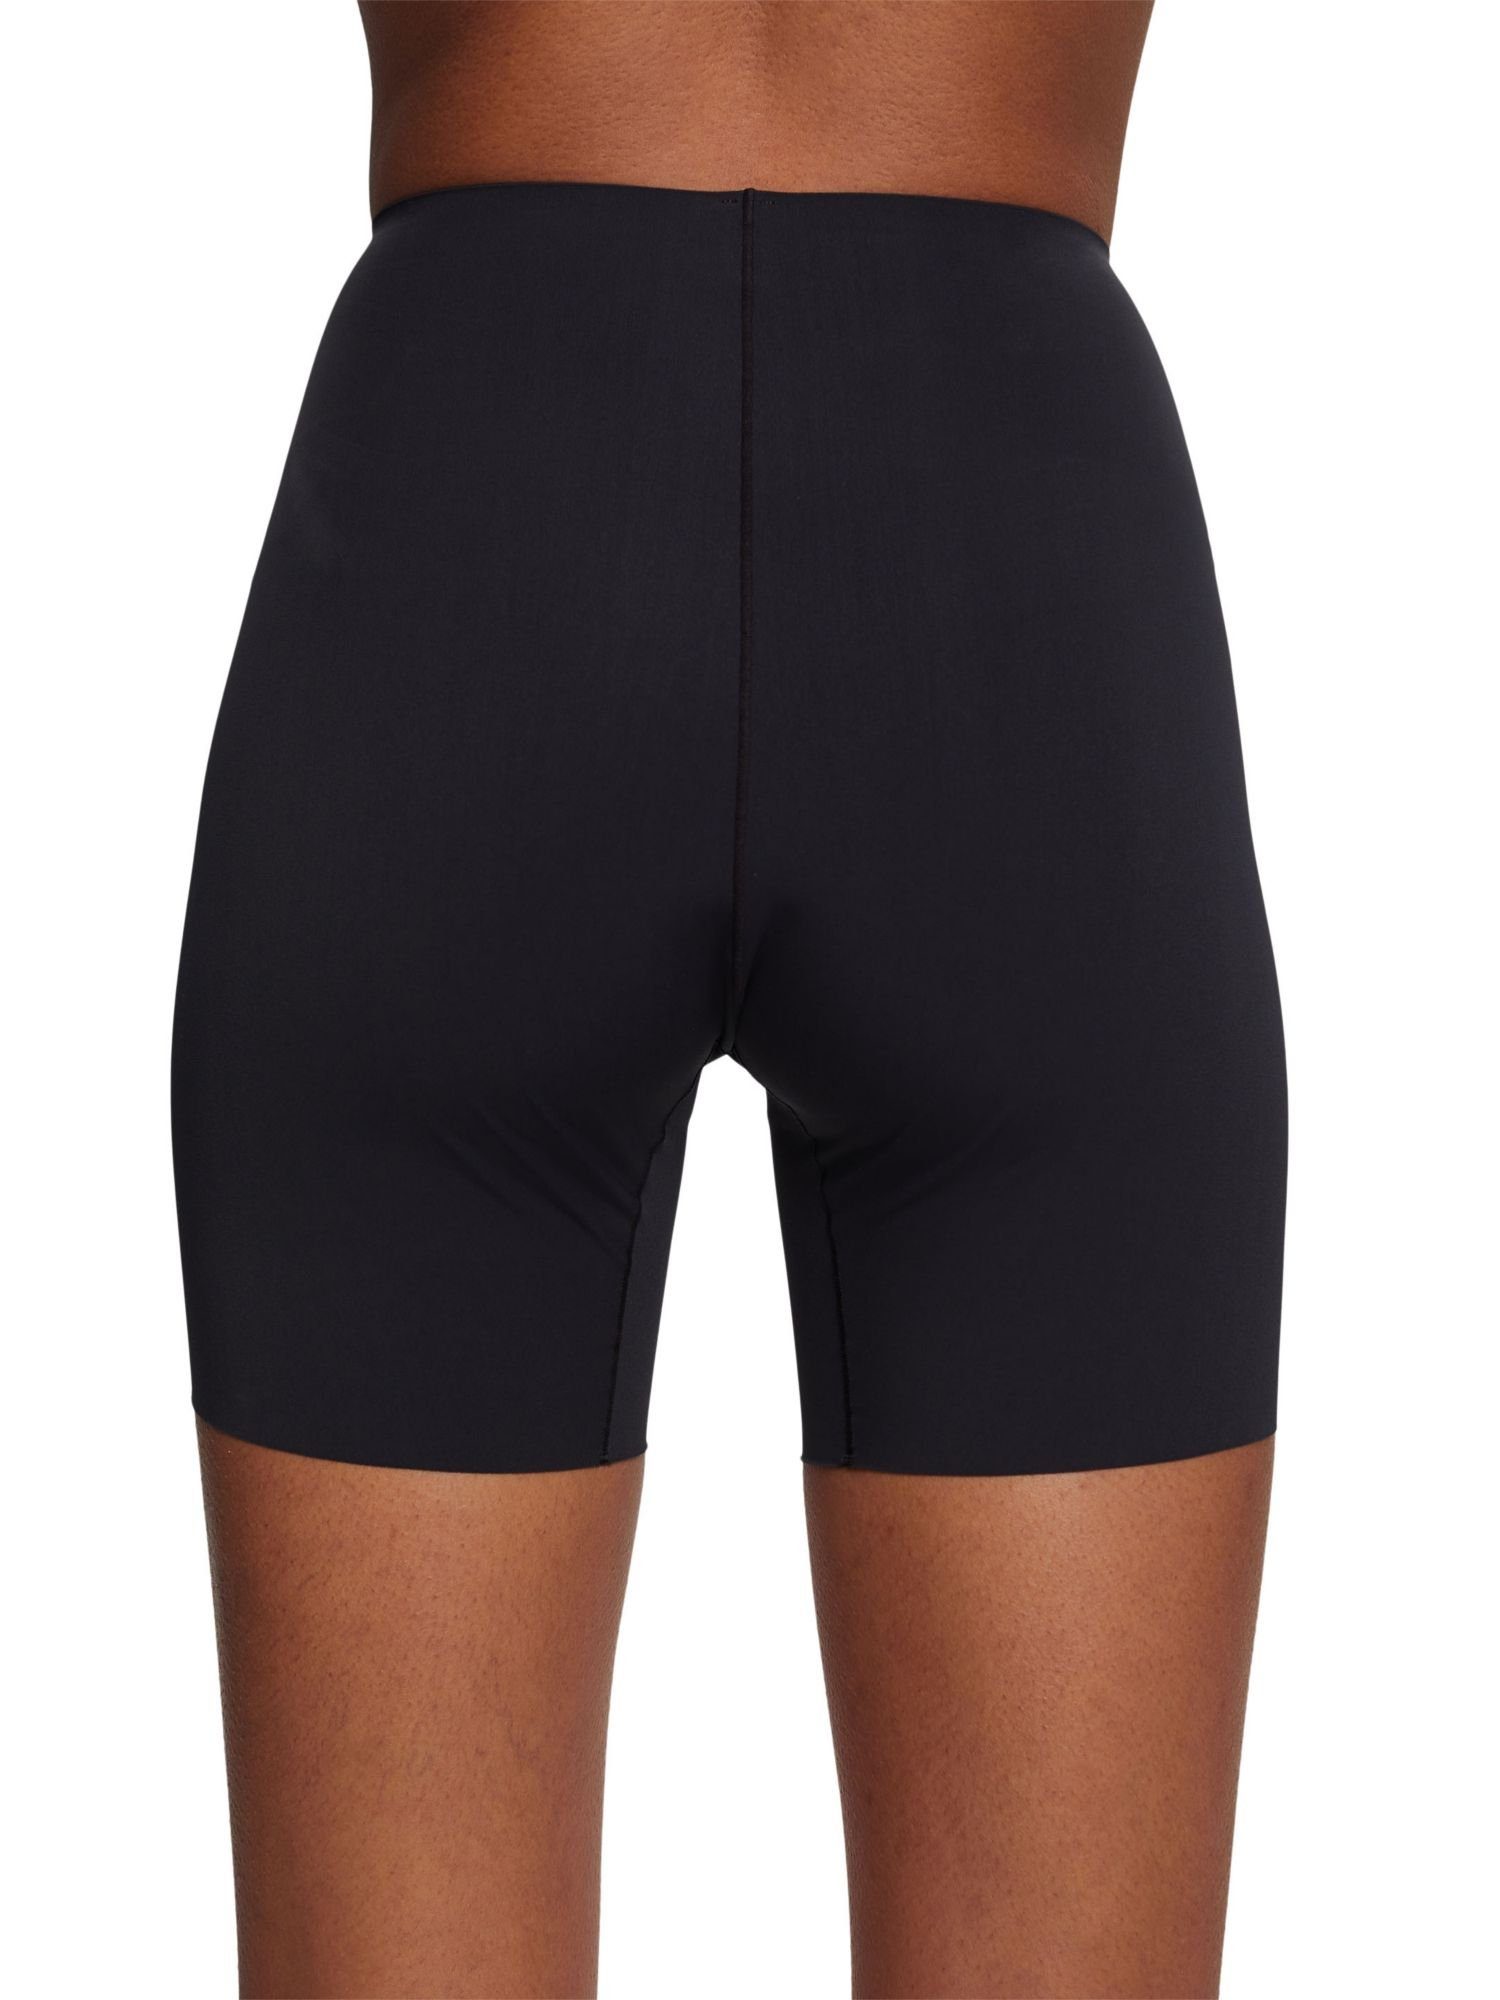 Esprit Hipster BLACK Shaping-Effekt mit dezentem Recycelt: Shorts